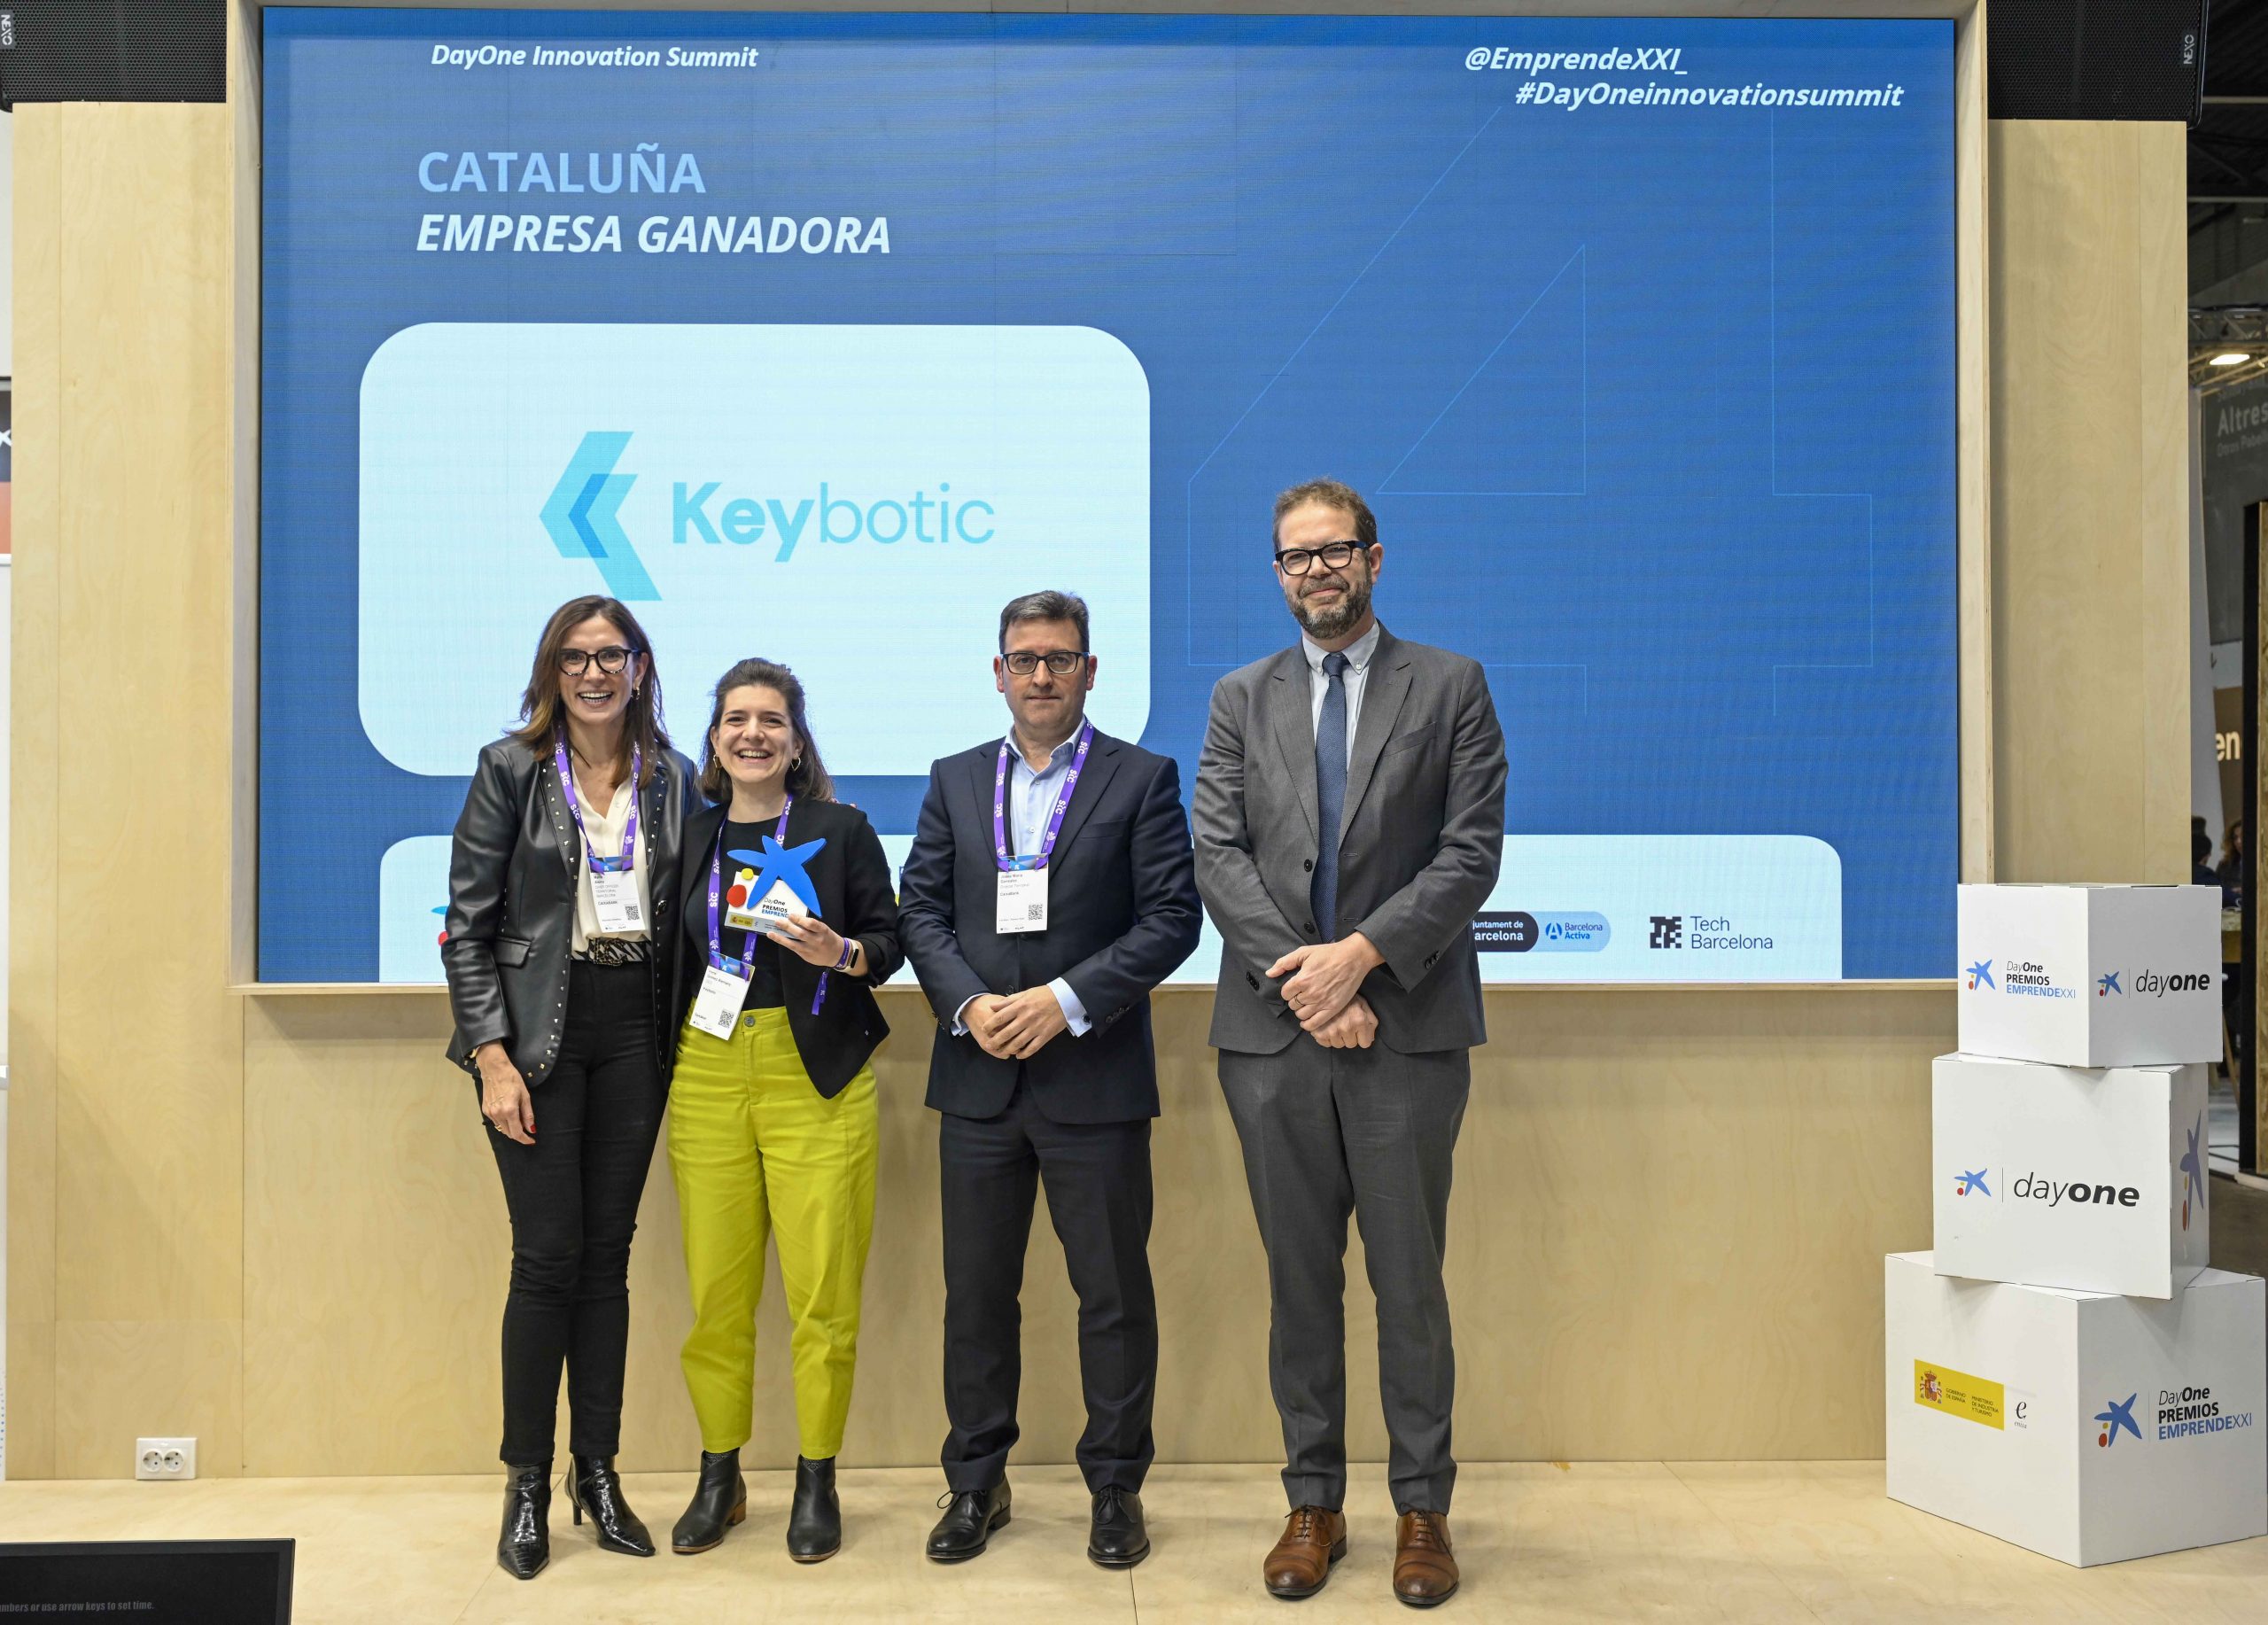 ganadora-dayone-innovation-summit-cataluña-23